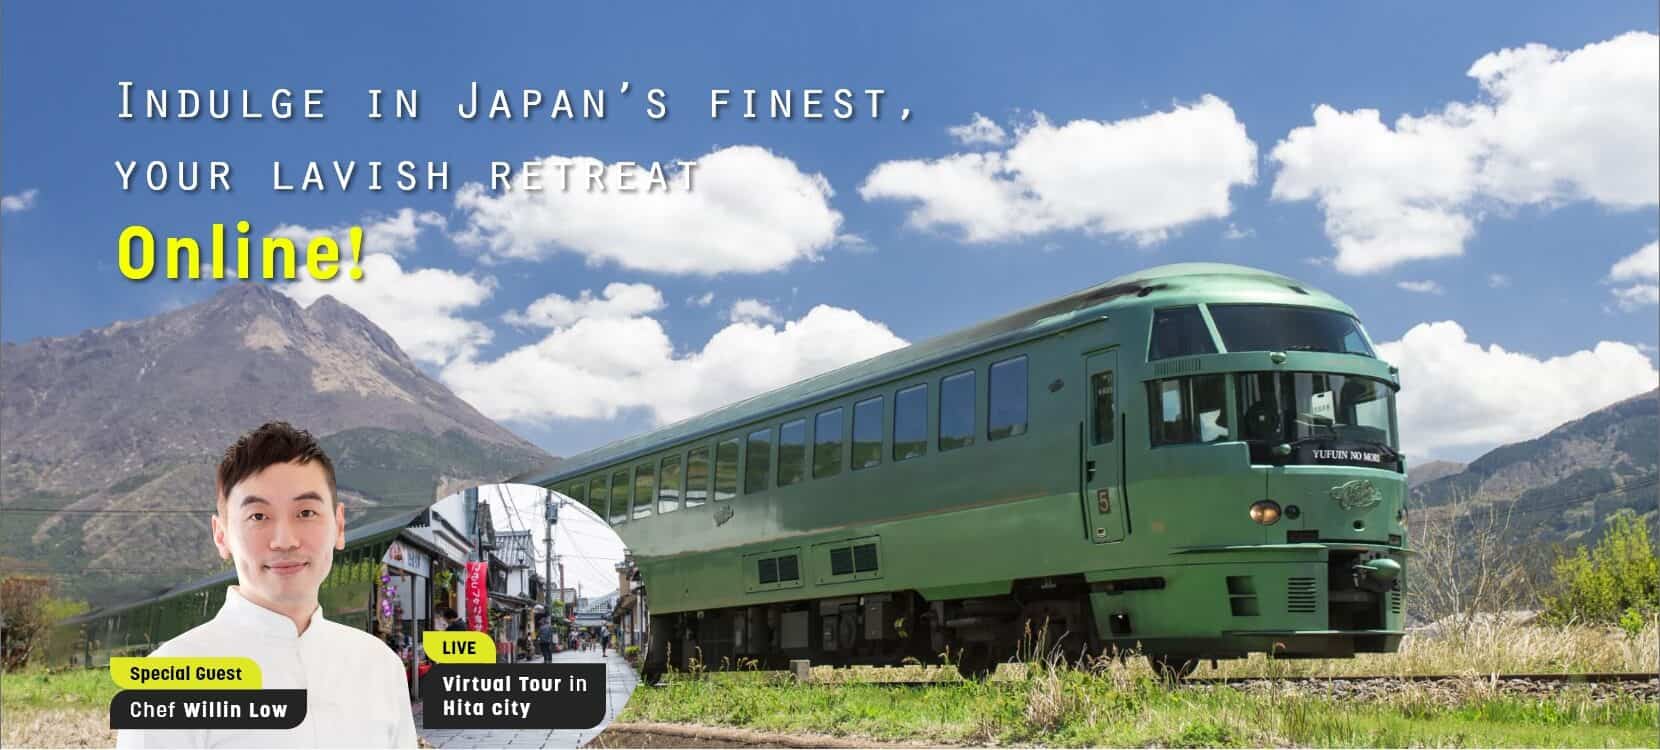 Indulge in Japan's finest, your lavish retreat Online!